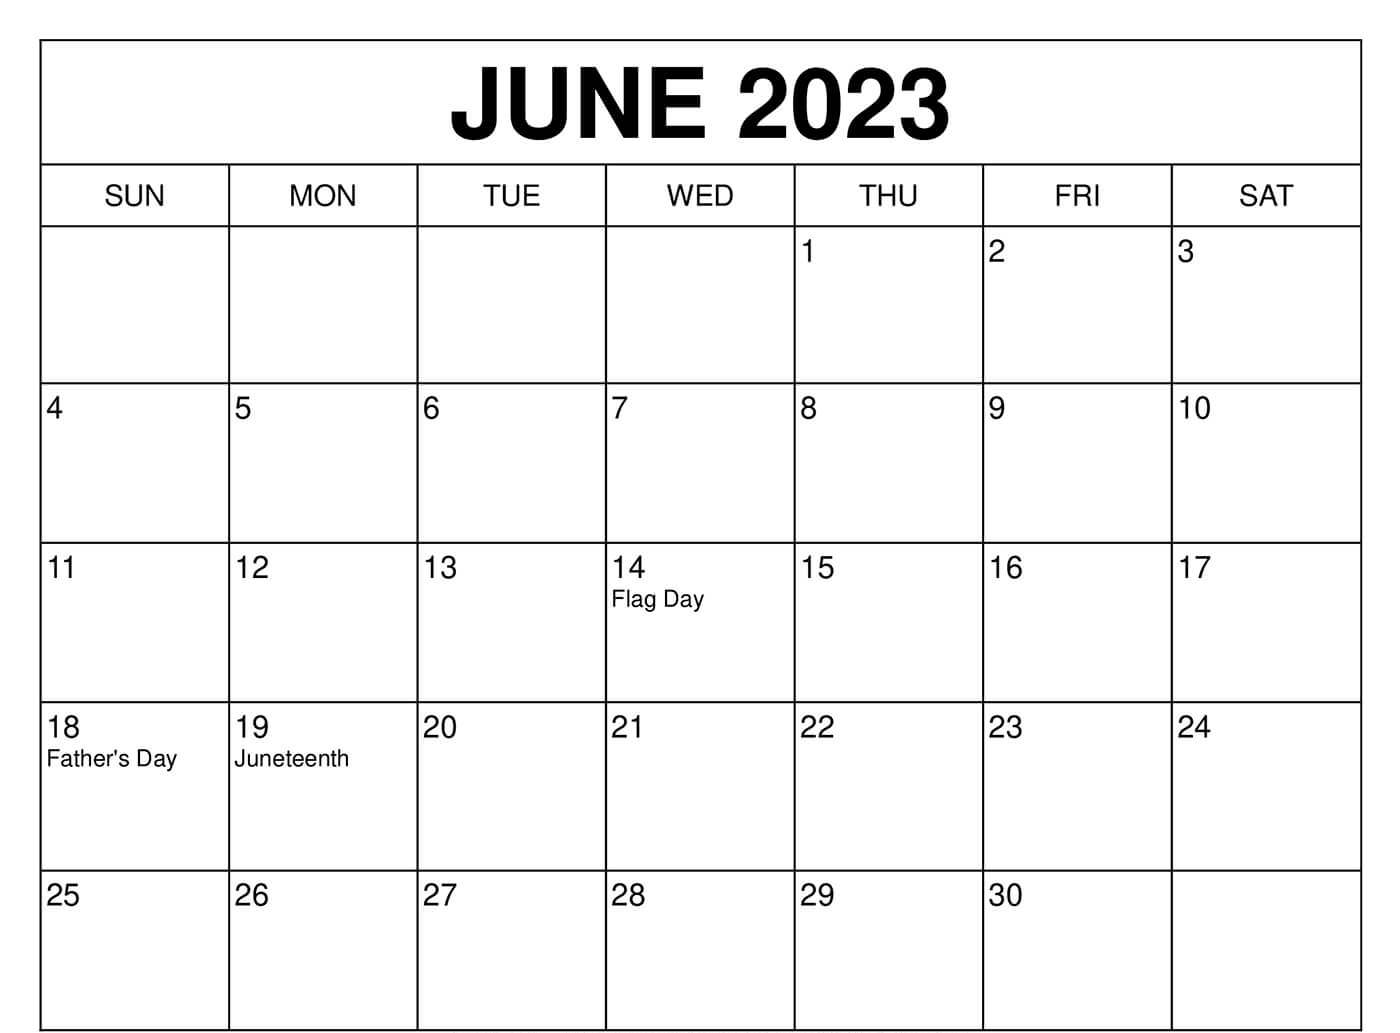 Organize with Excel June 2023 Calendar